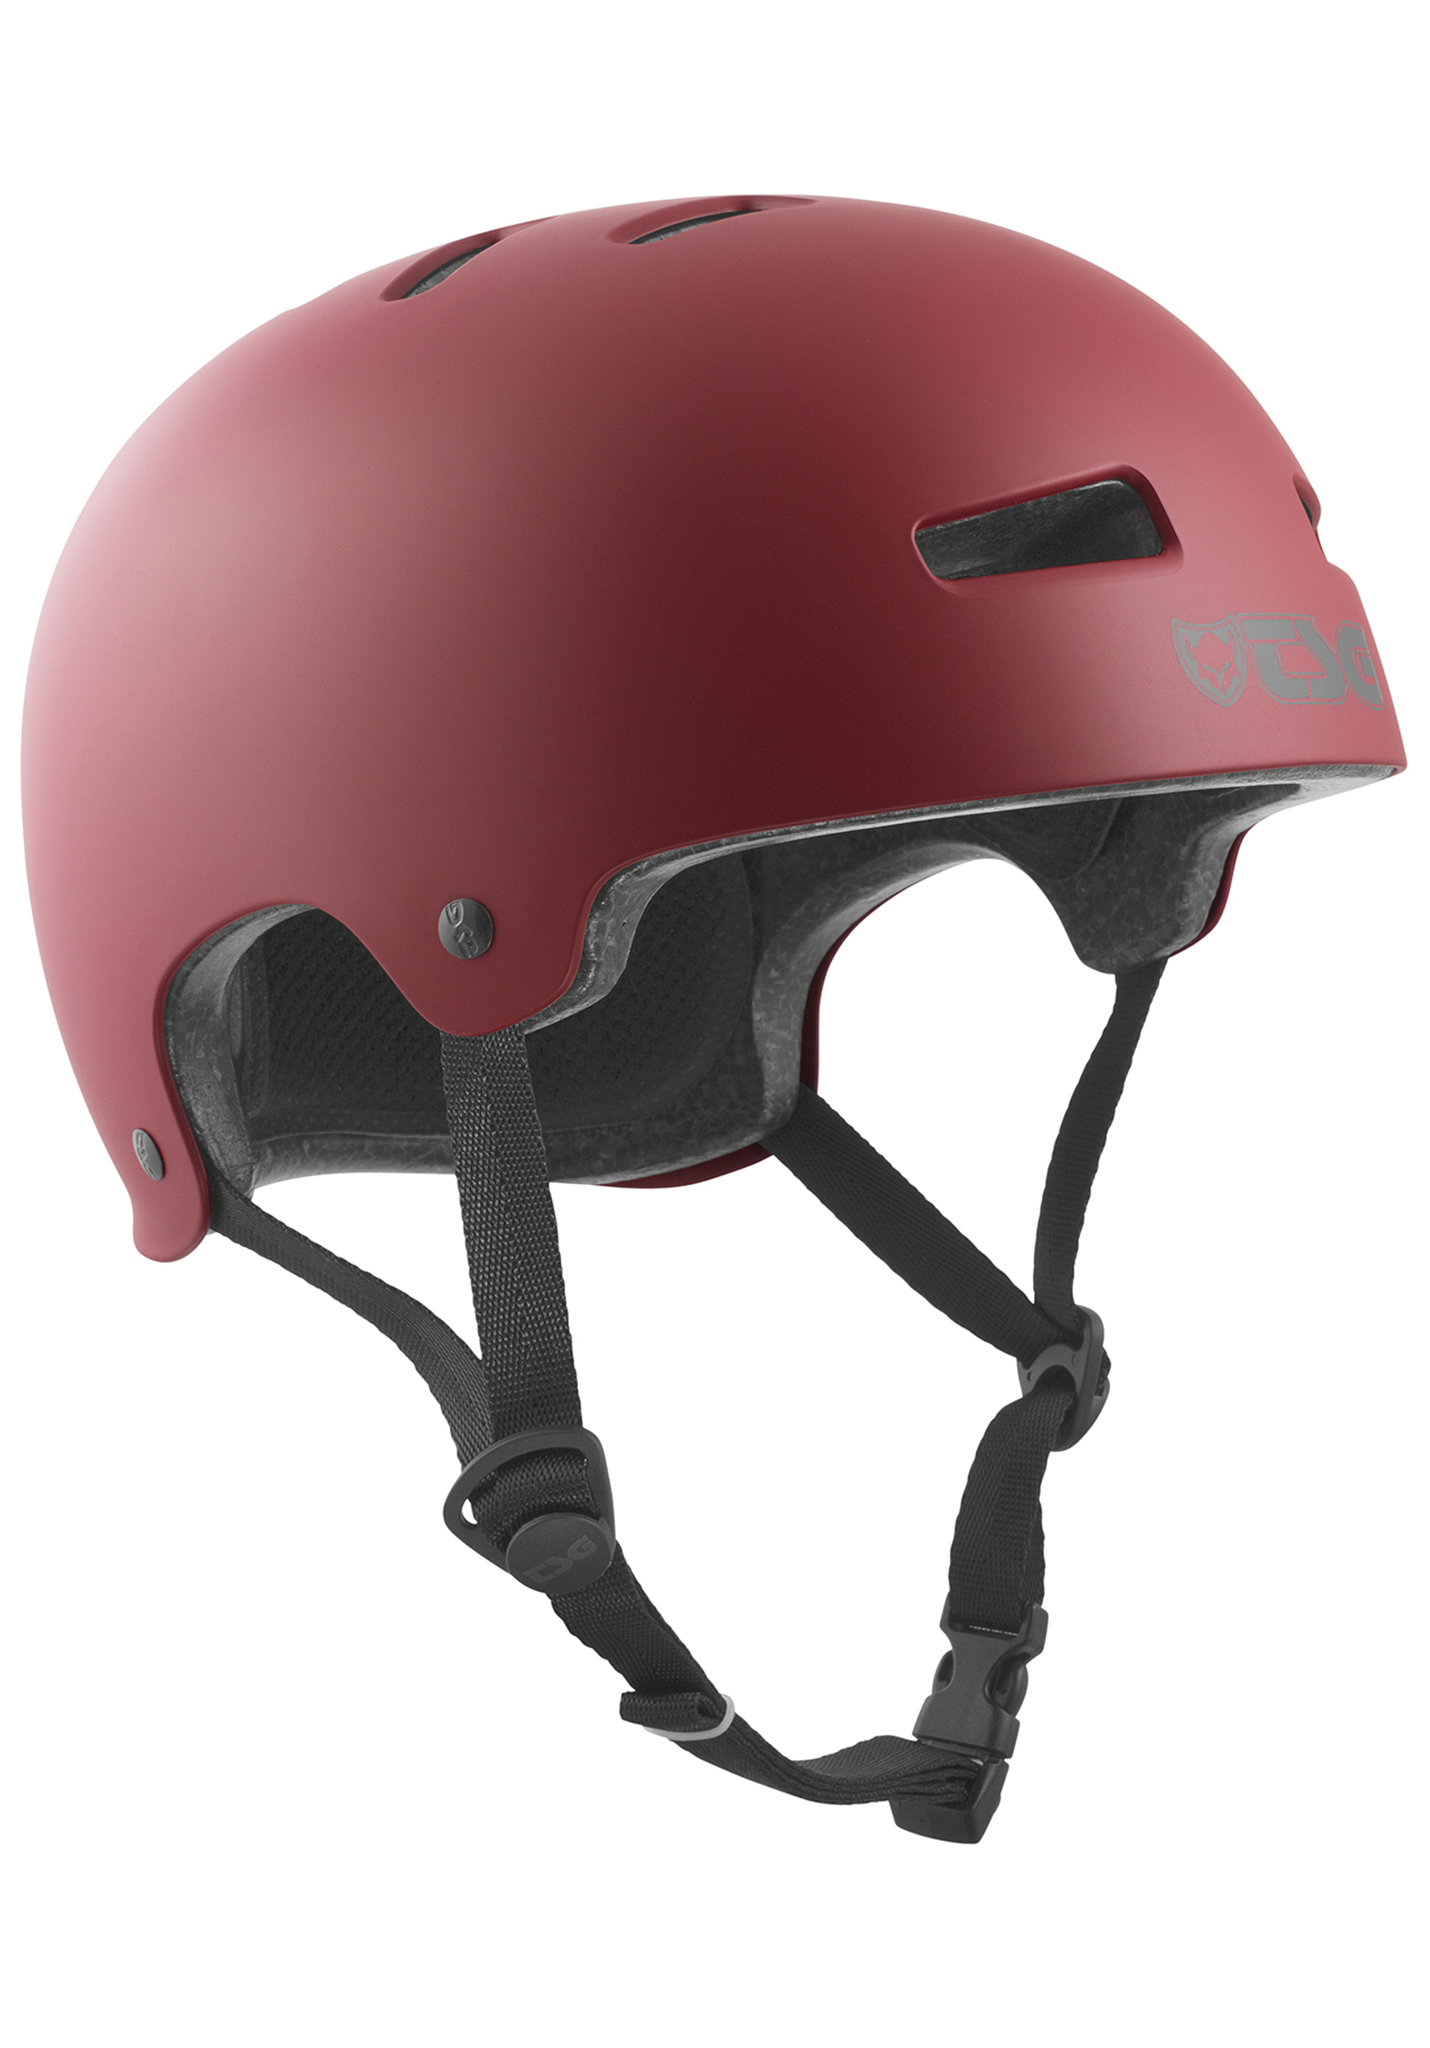 TSG TSG Evolution satin lime green L/XL Skate Helme Helm rote dahlie L/XL